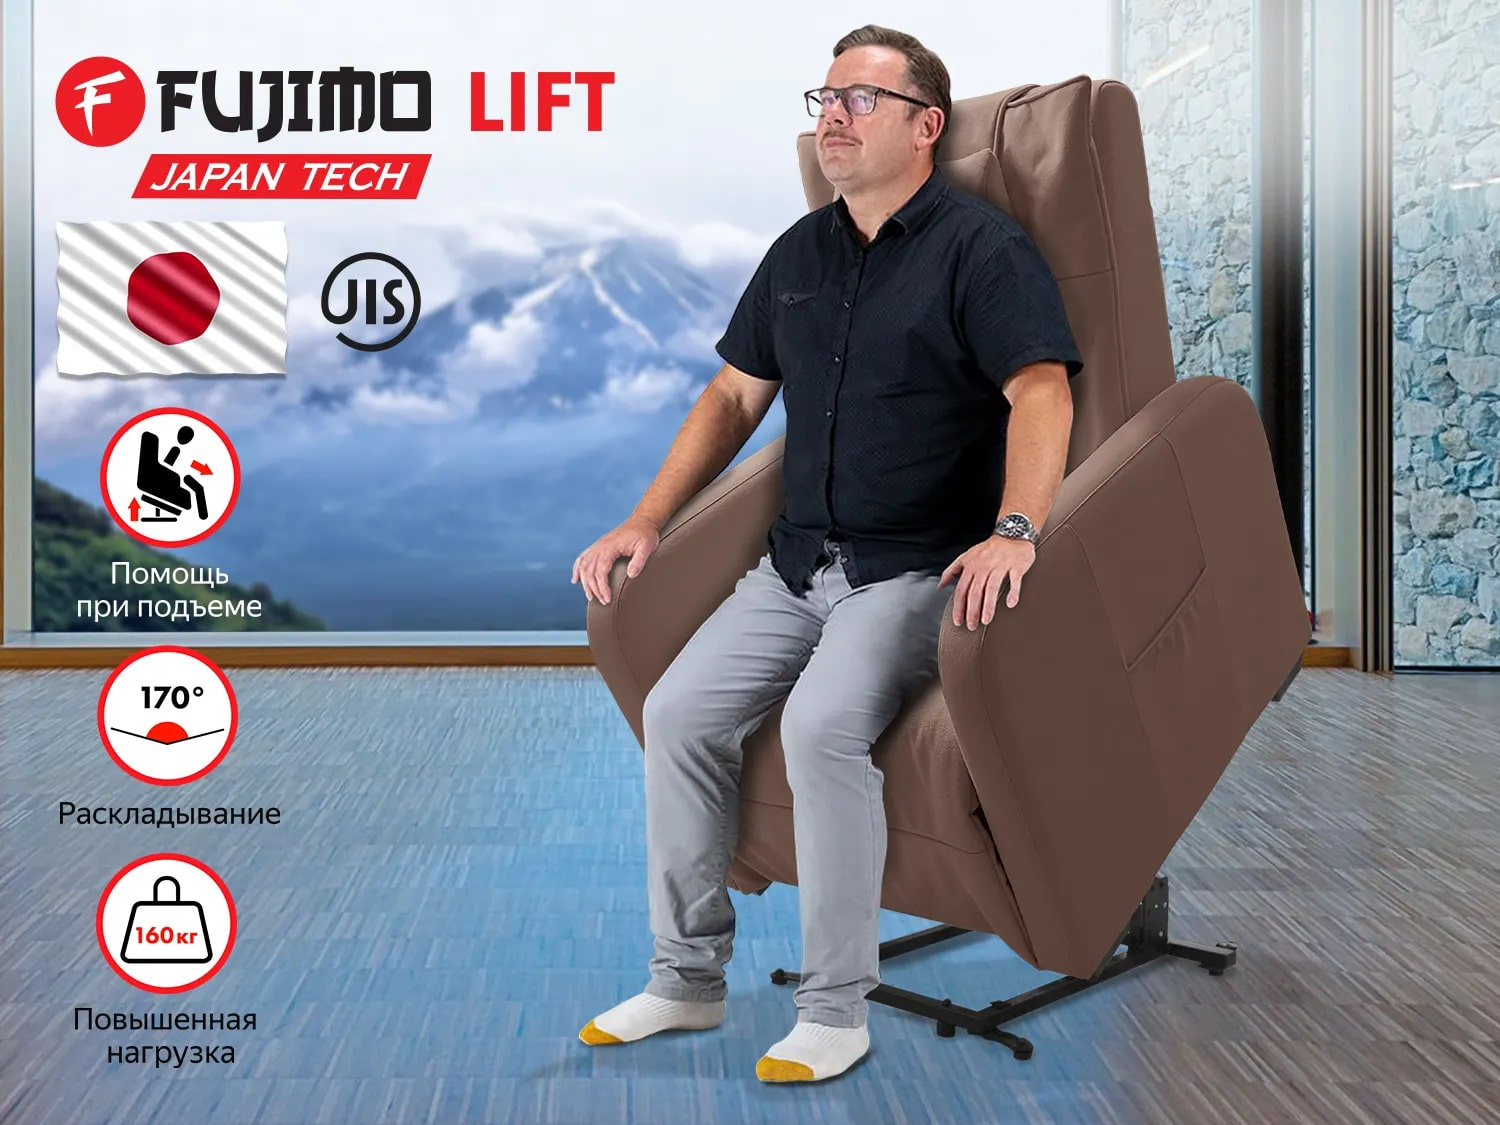 LIFT CHAIR F3005 FLFL с подъемом Терра в СПб по цене 89000 ₽ в категории массажные кресла Fujimo